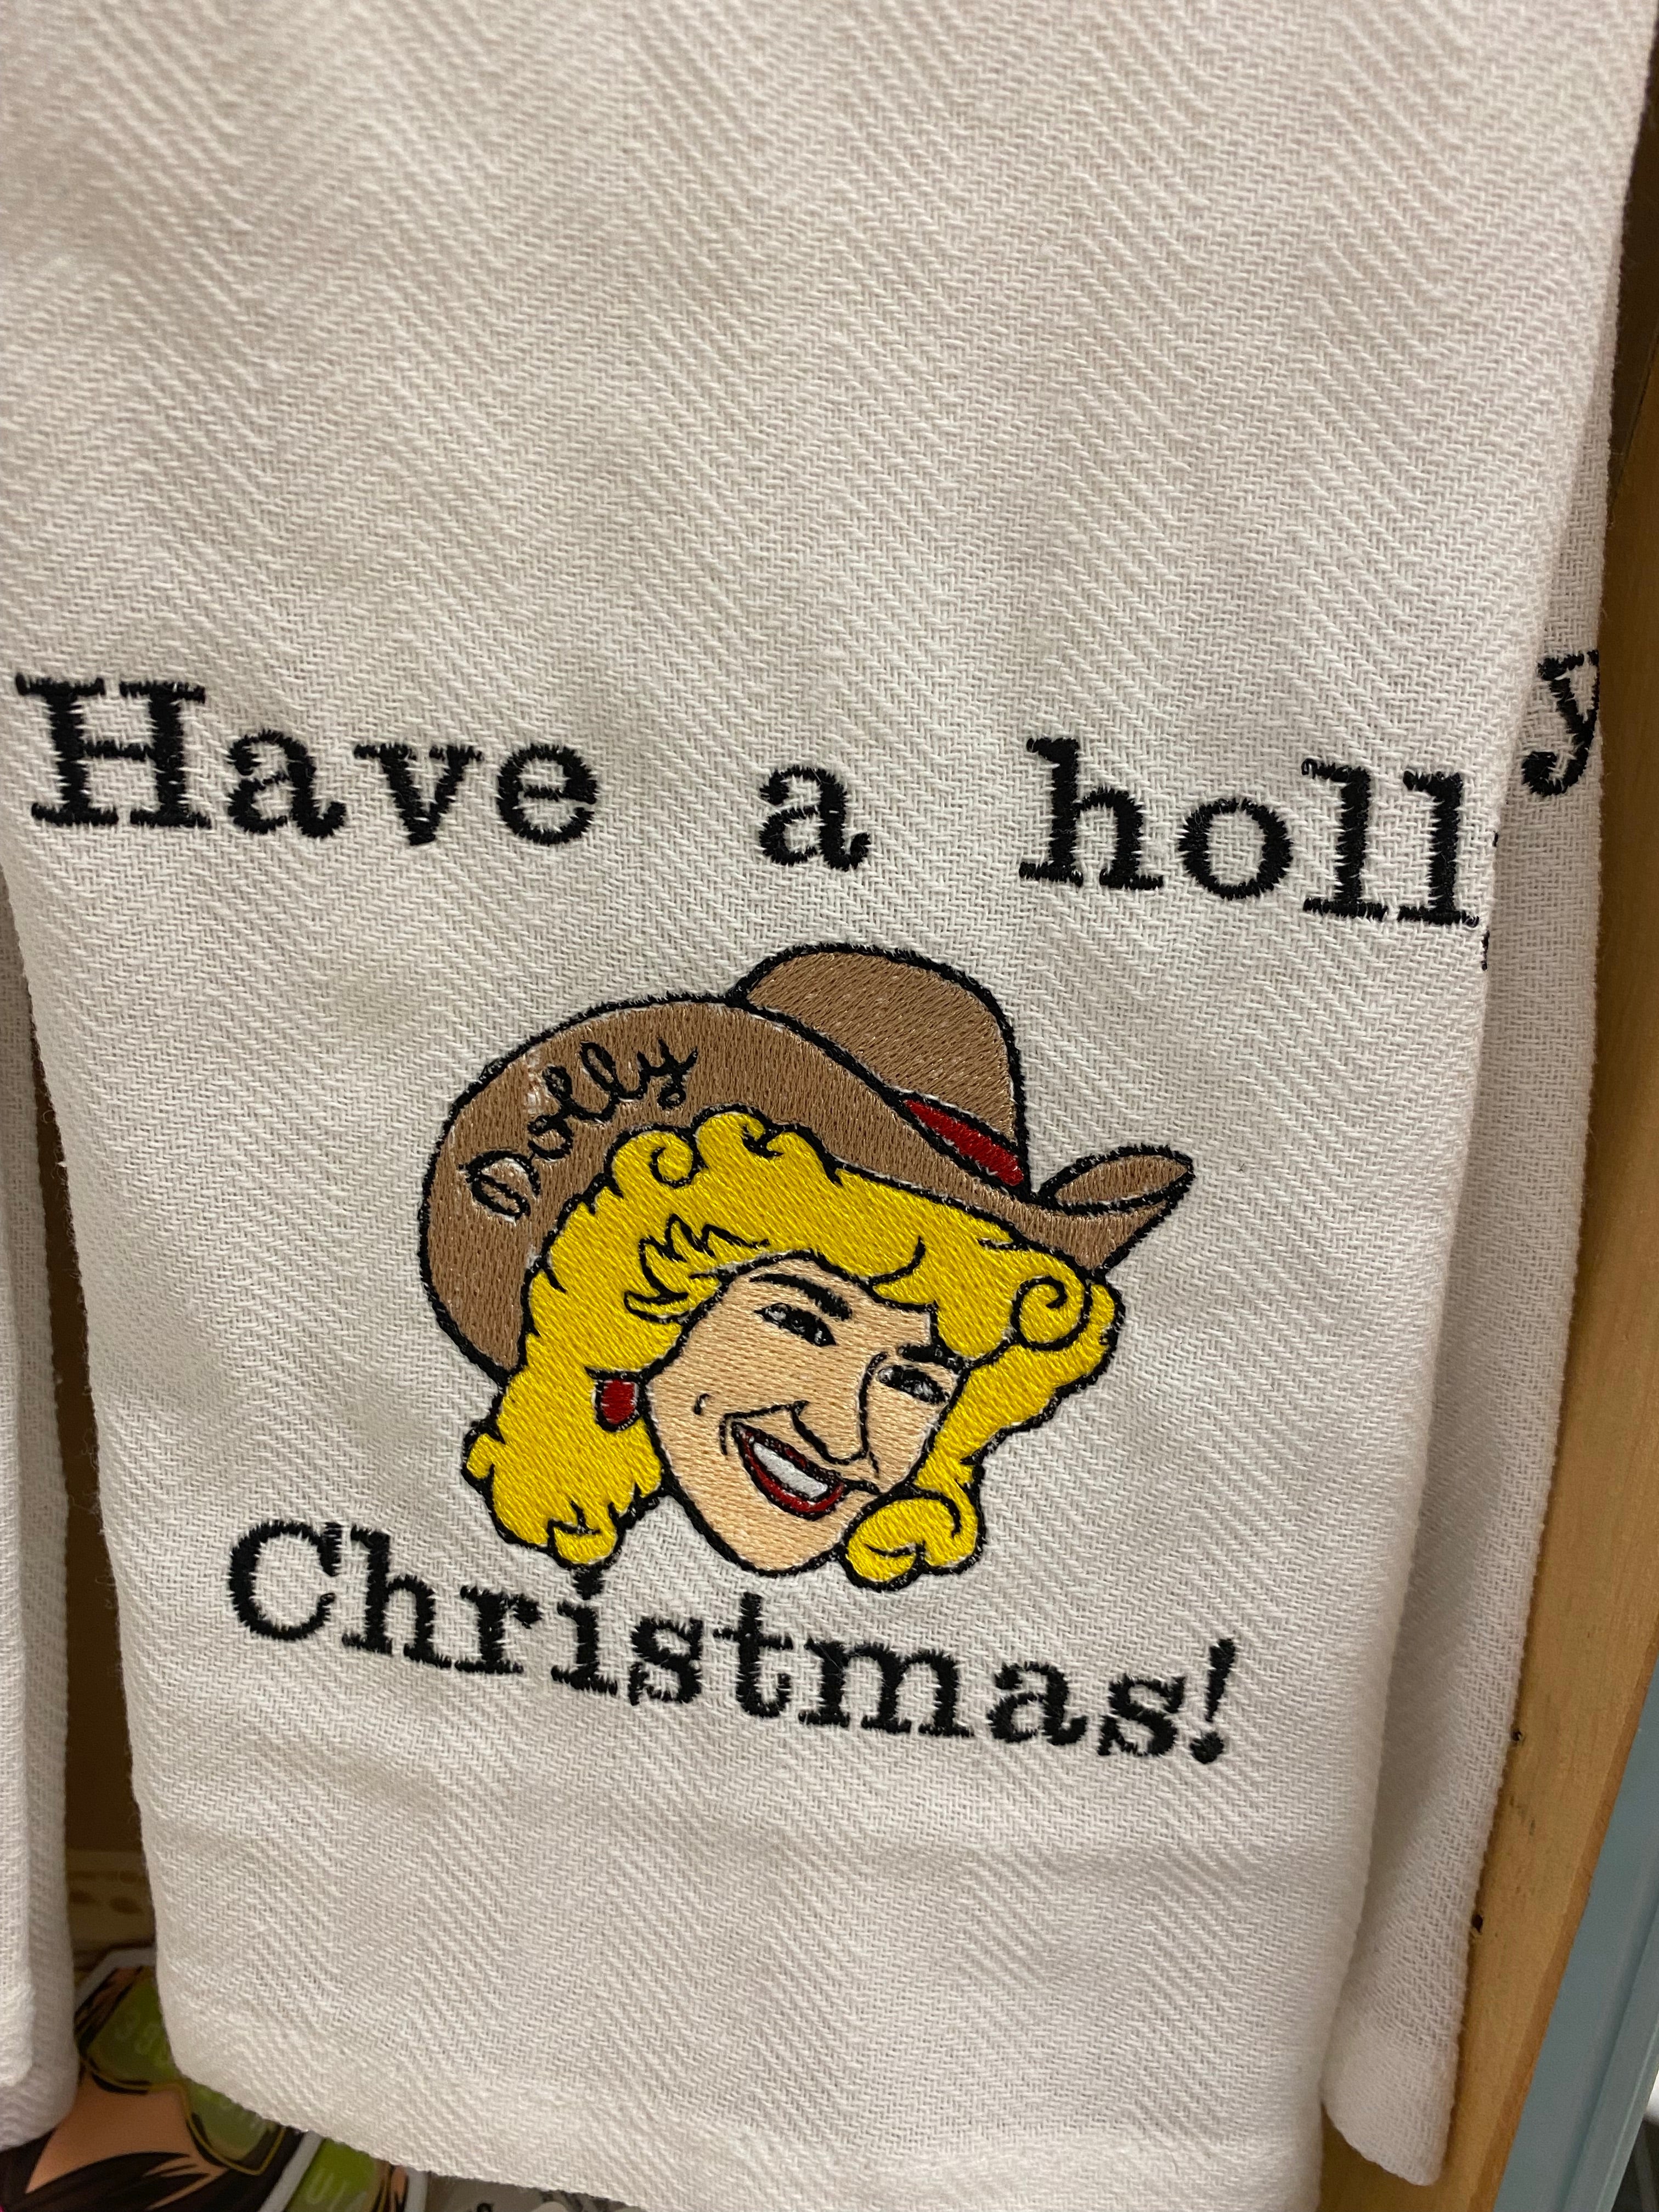 Holly Dolly Christmas Towel